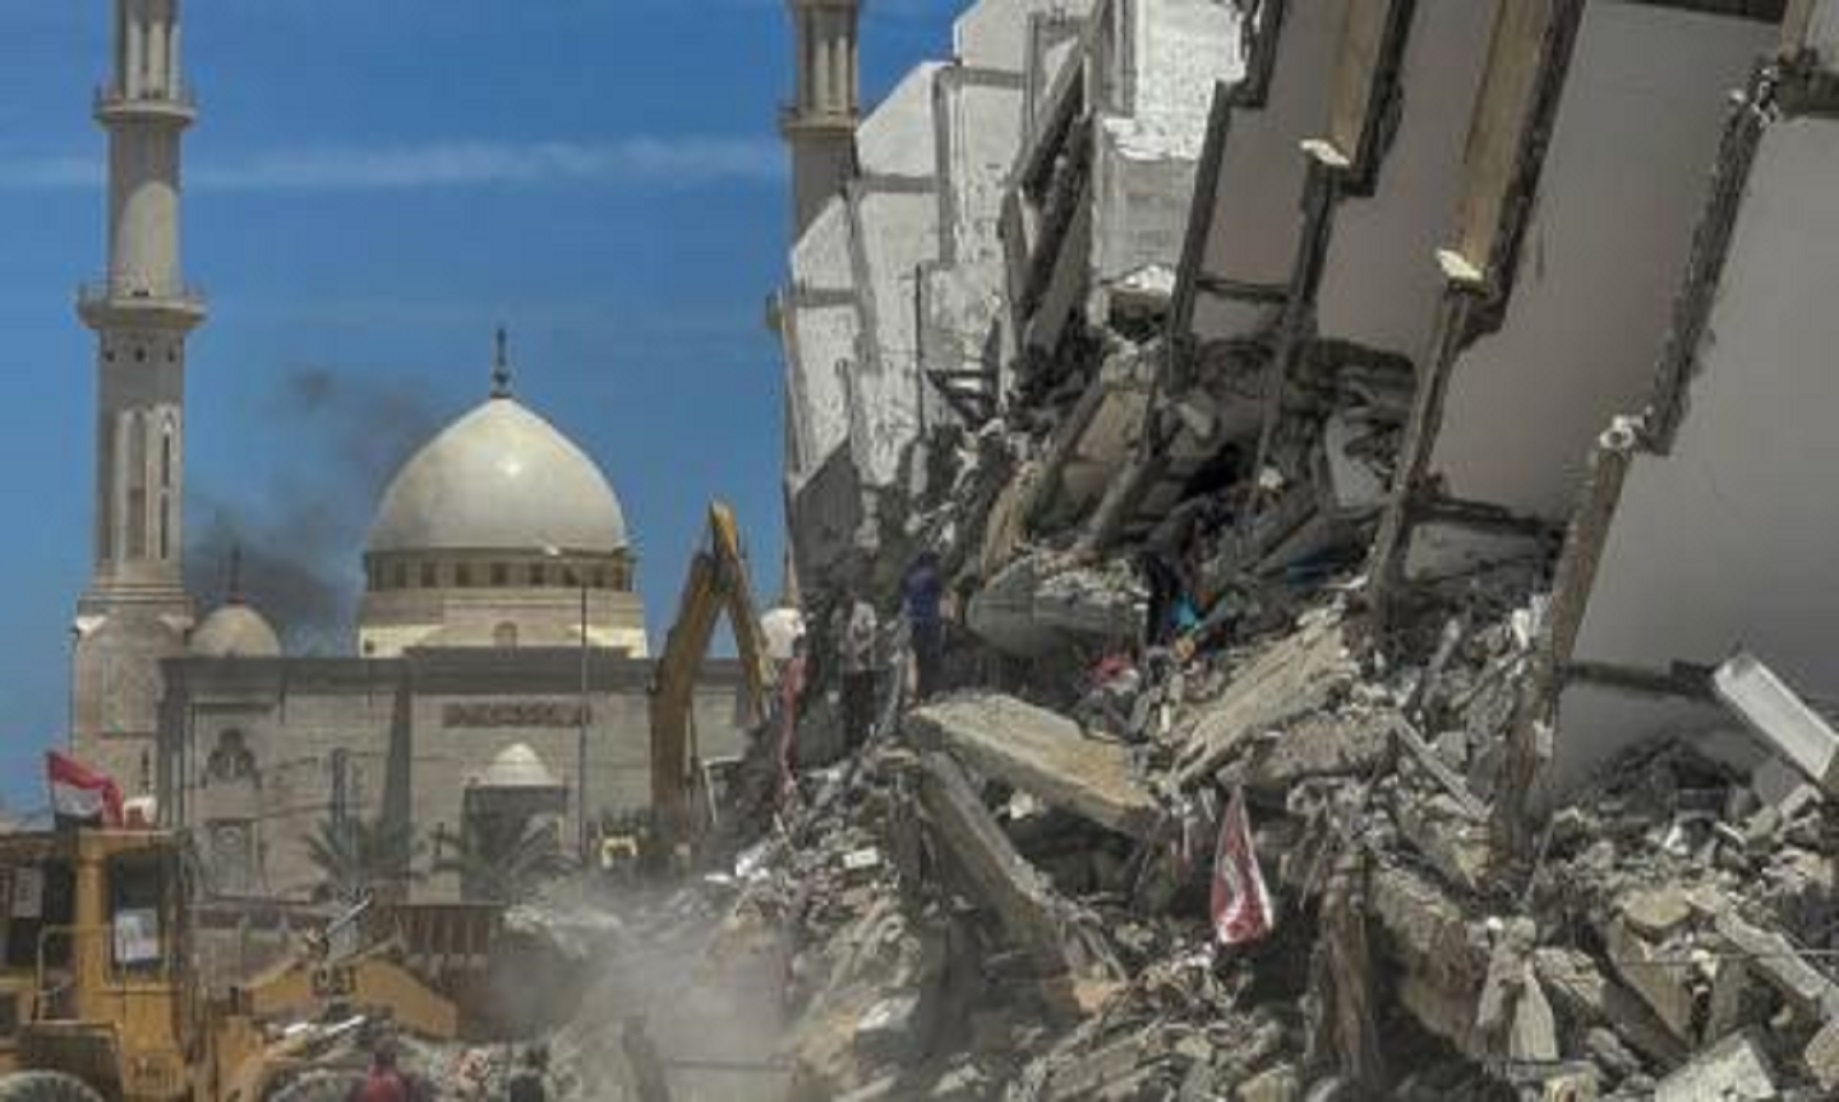 Forum On Gaza Reconstruction Kicks Off In Egypt